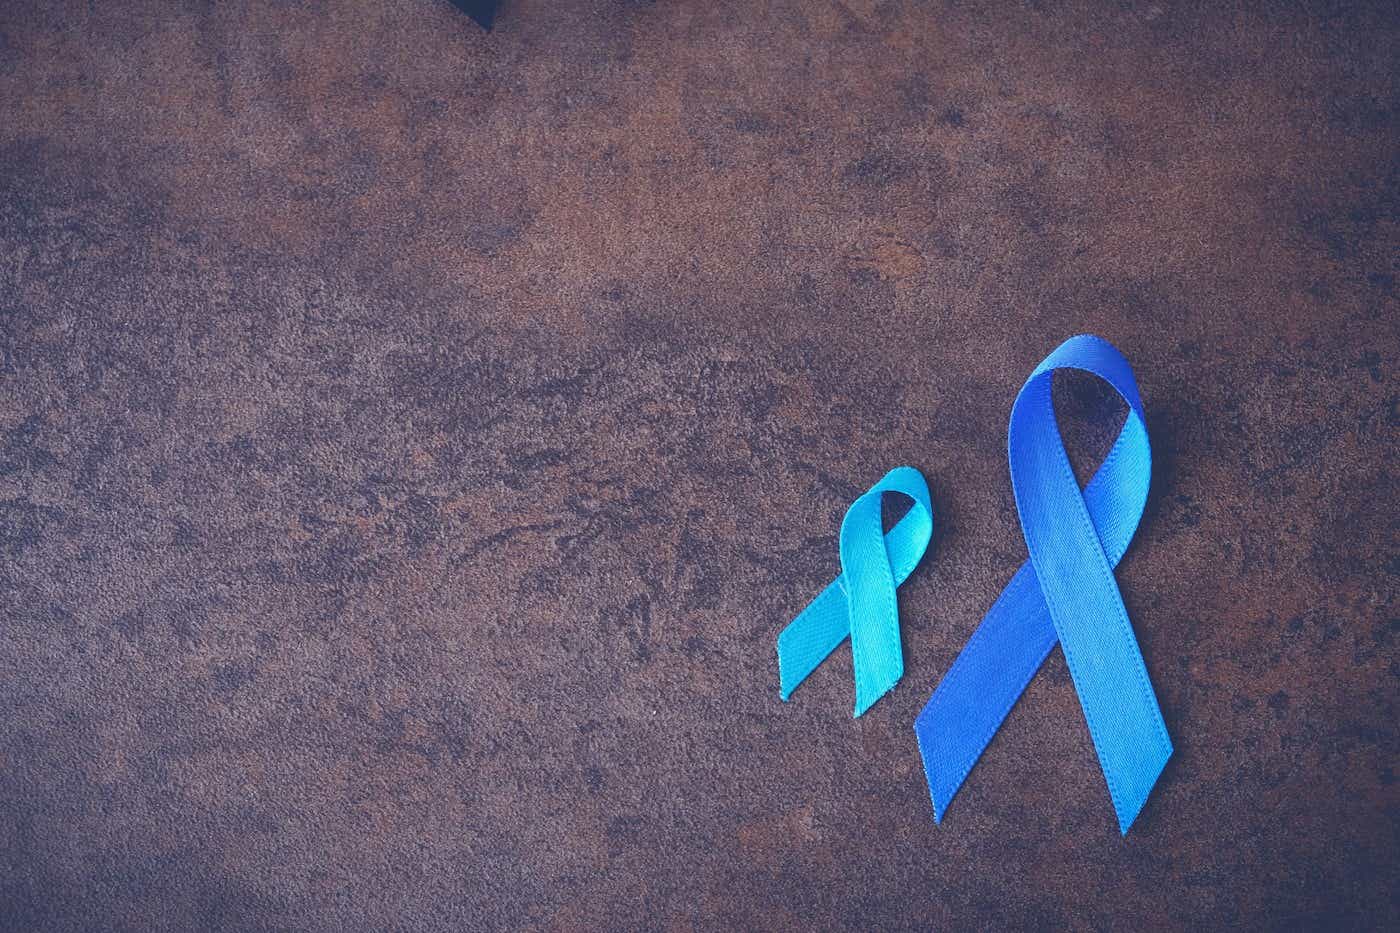 cancer awareness ribbon